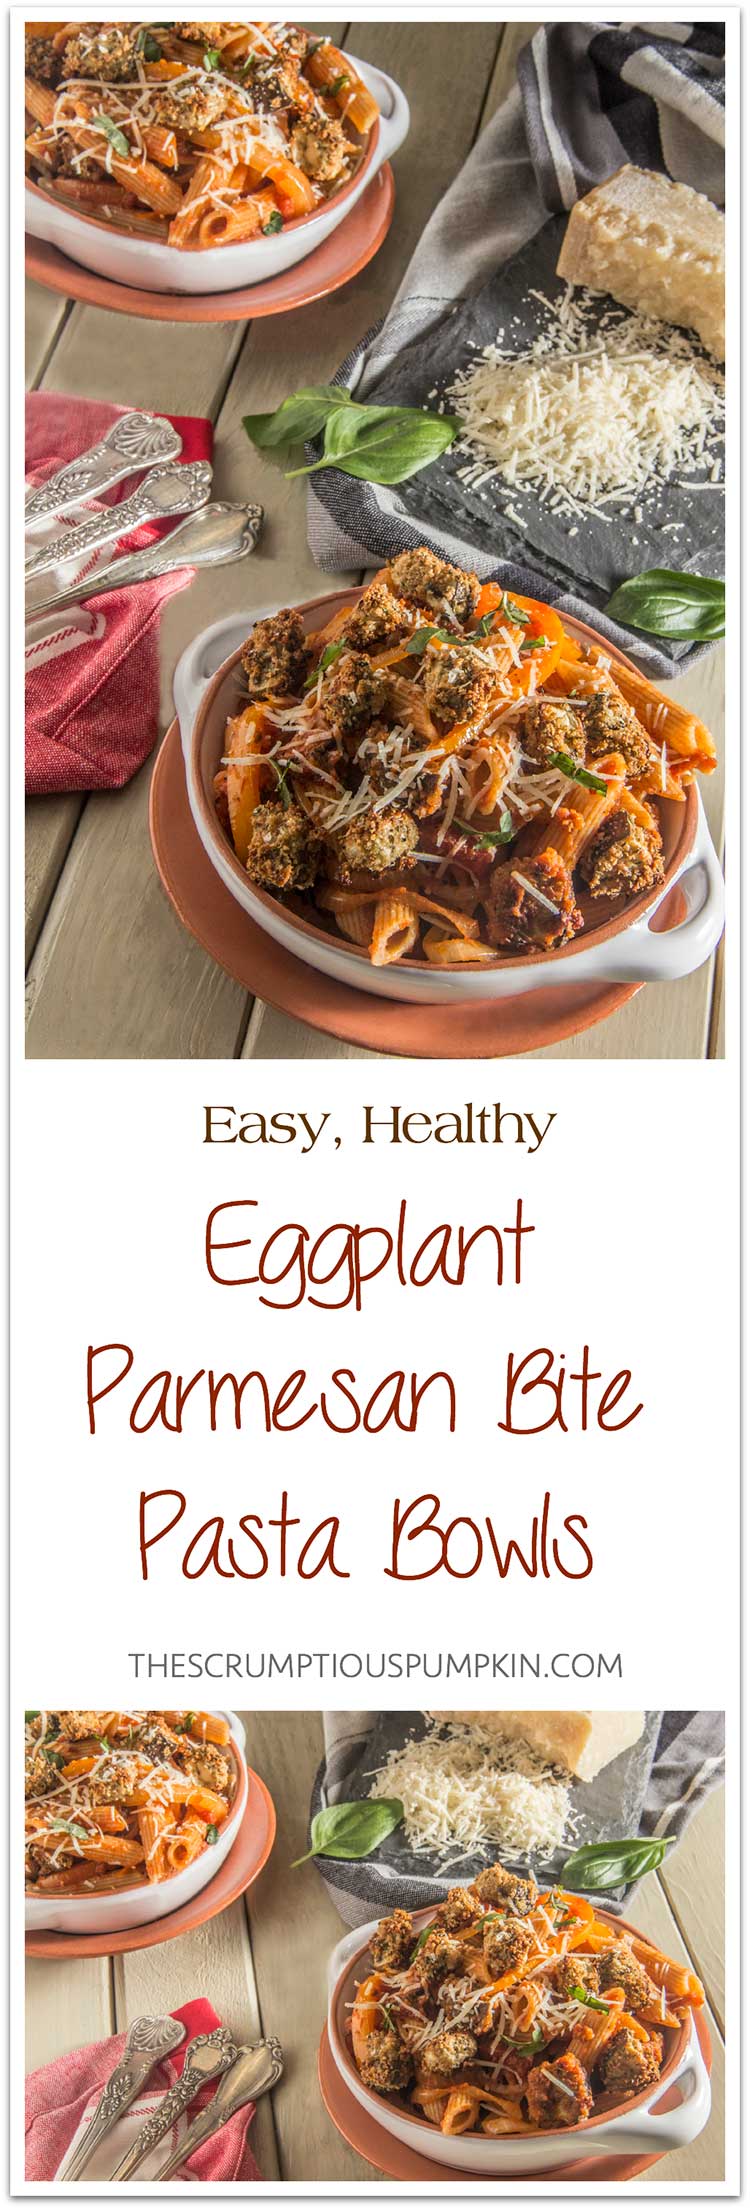 Easy-Healthy-Eggplant-Parmesan-Bite-Pasta-Bowls